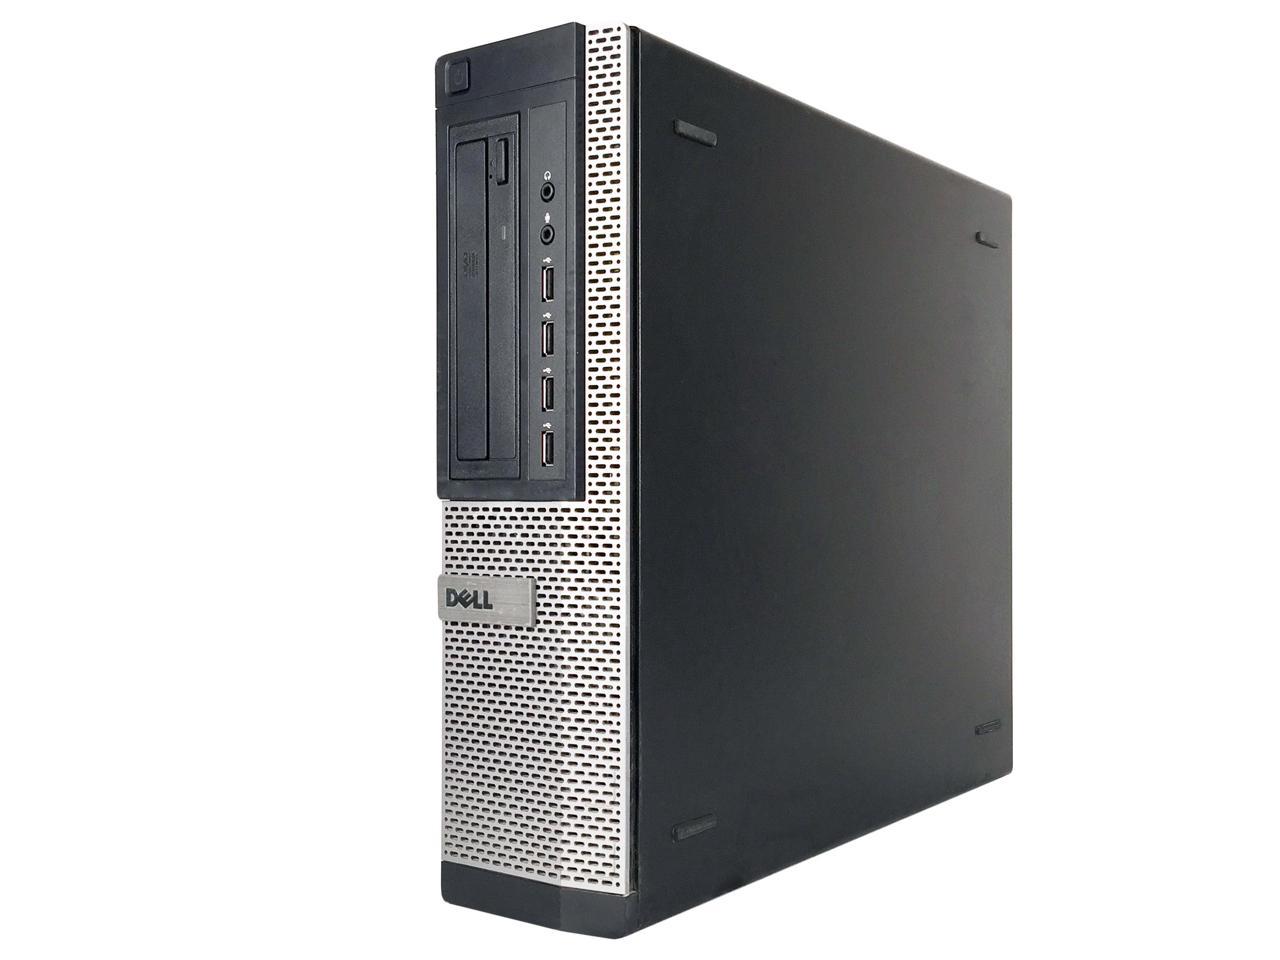 Refurbished Dell Grade A OptiPlex 990 Desktop Computer, Intel Core I5-2500 (3.3 GHz), 8G DDR3, 120G SSD, DVD, Windows 10 Home 64-bit (English/Spanish), 1 Year Warranty